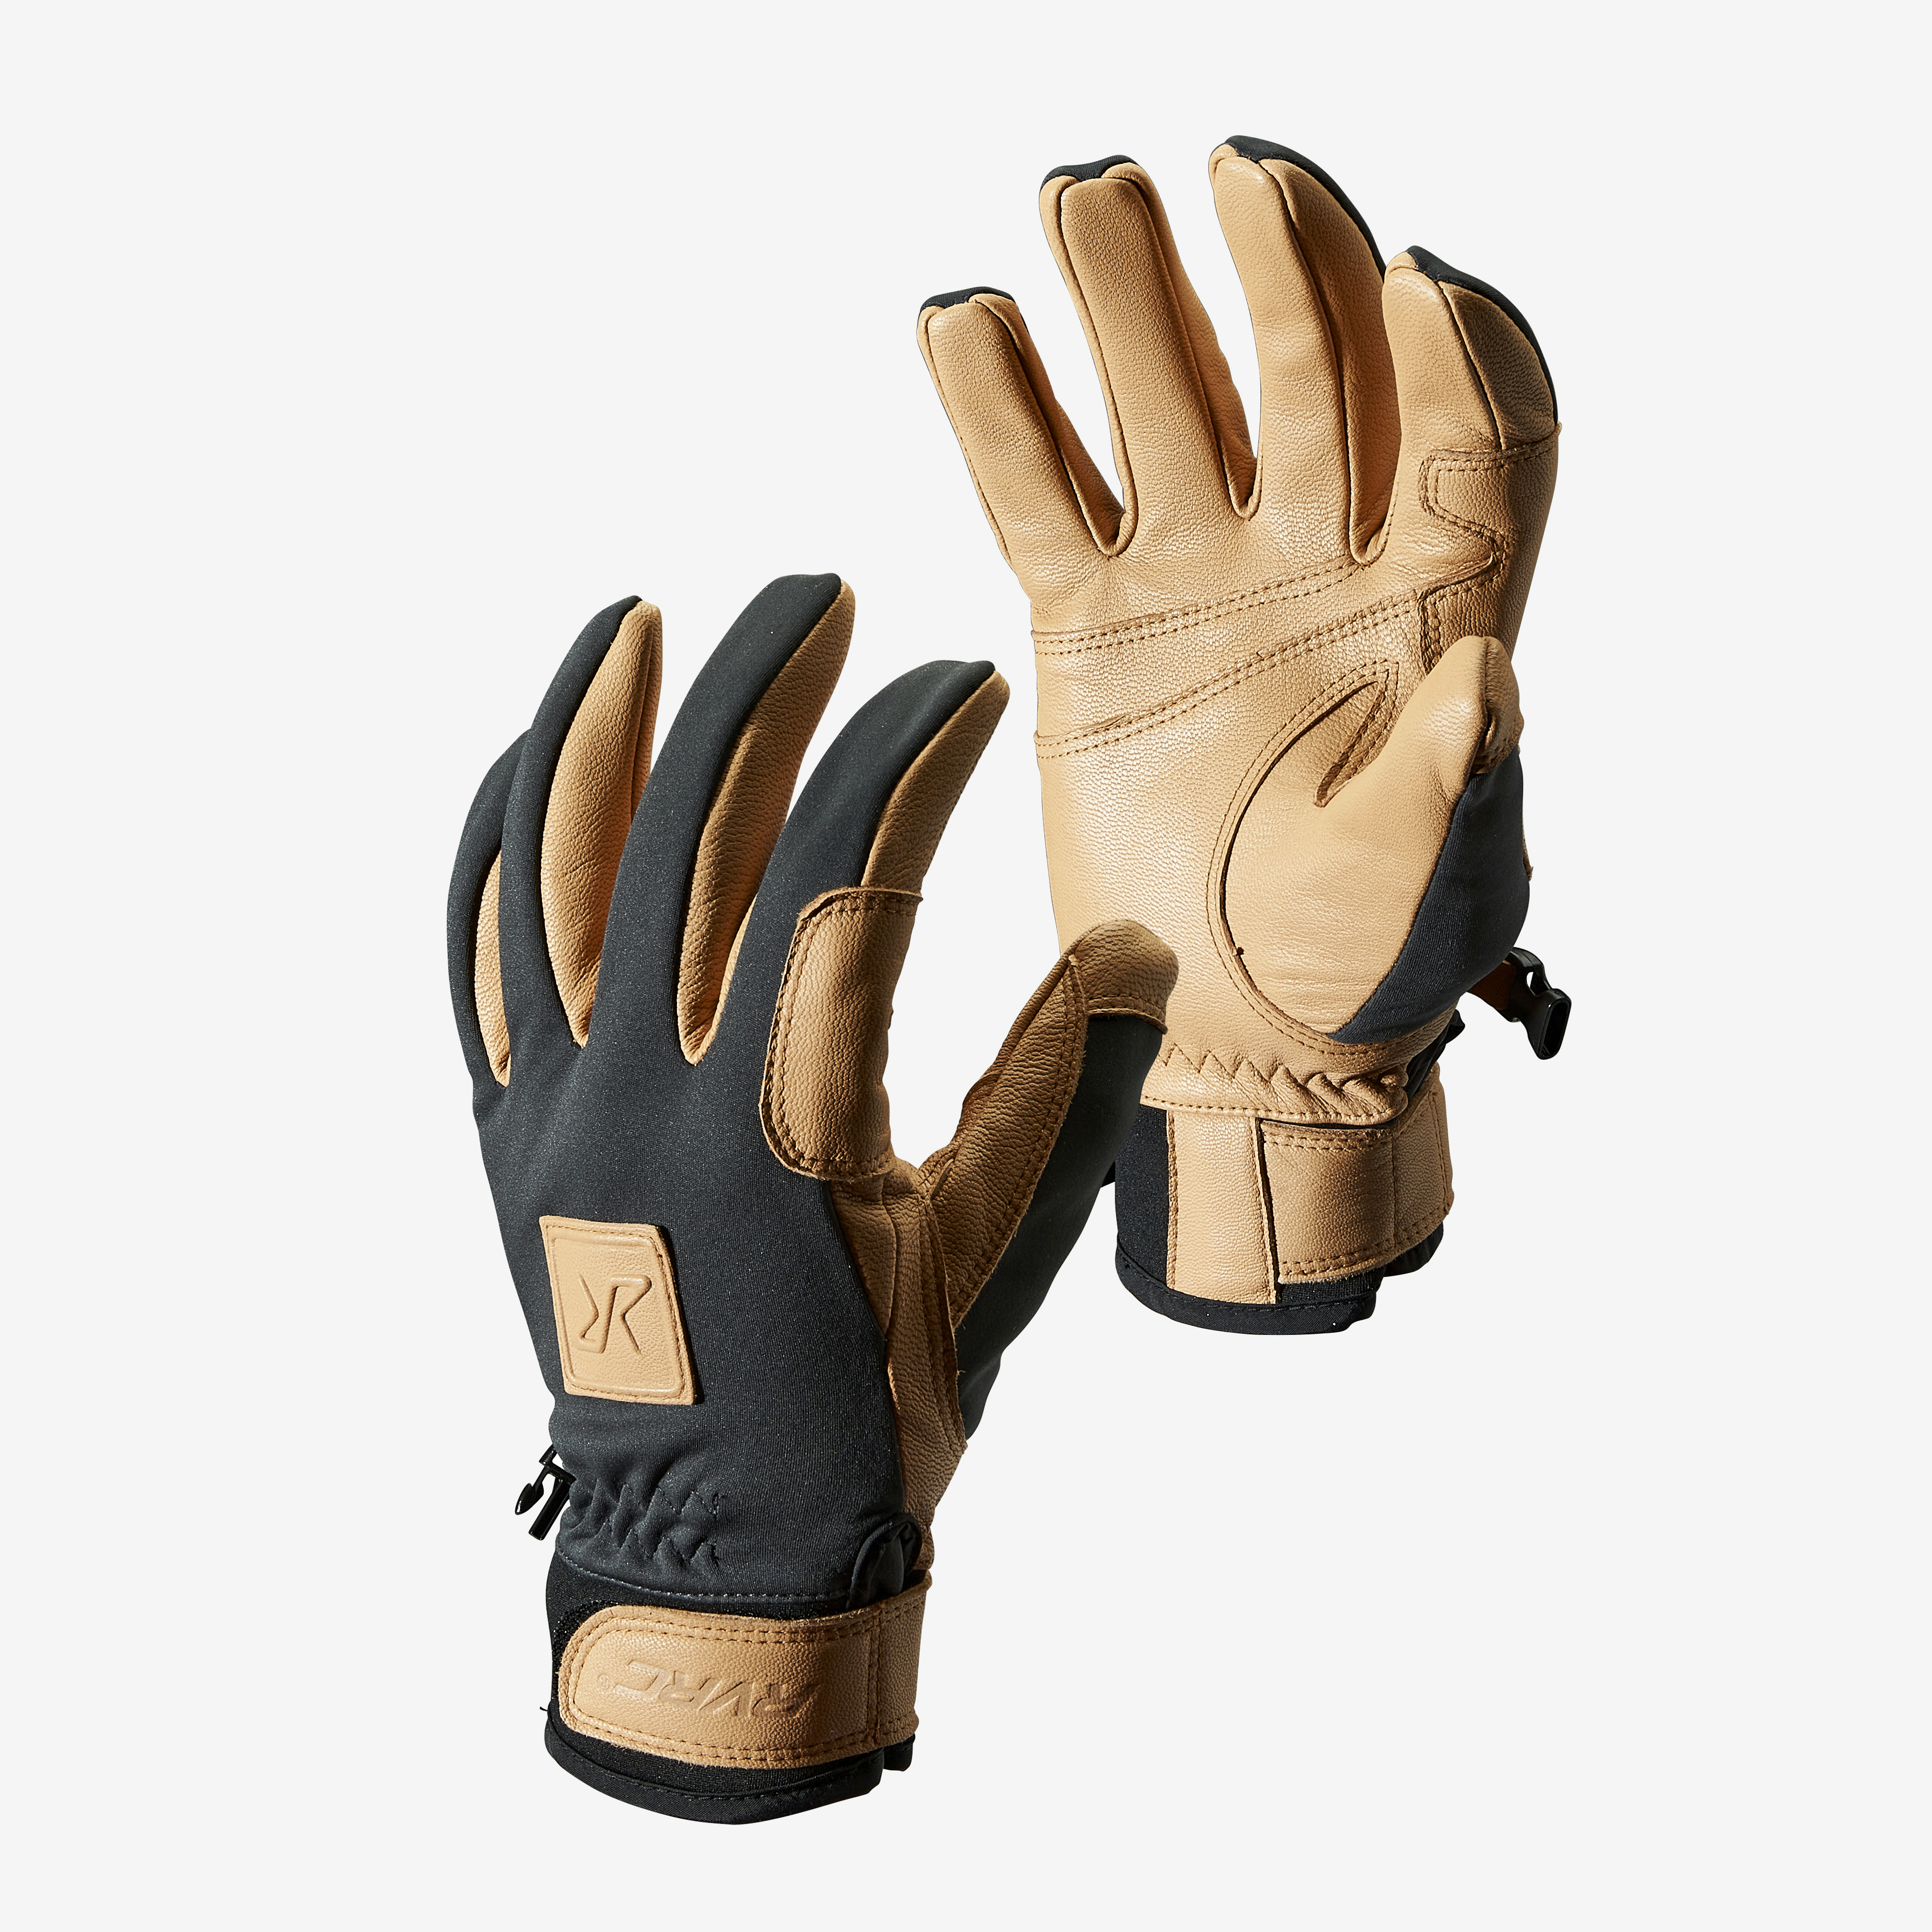 Outdoor Glove Unisex Tan/Anthracite Storlek:G11 – Accessoarer > Handskar